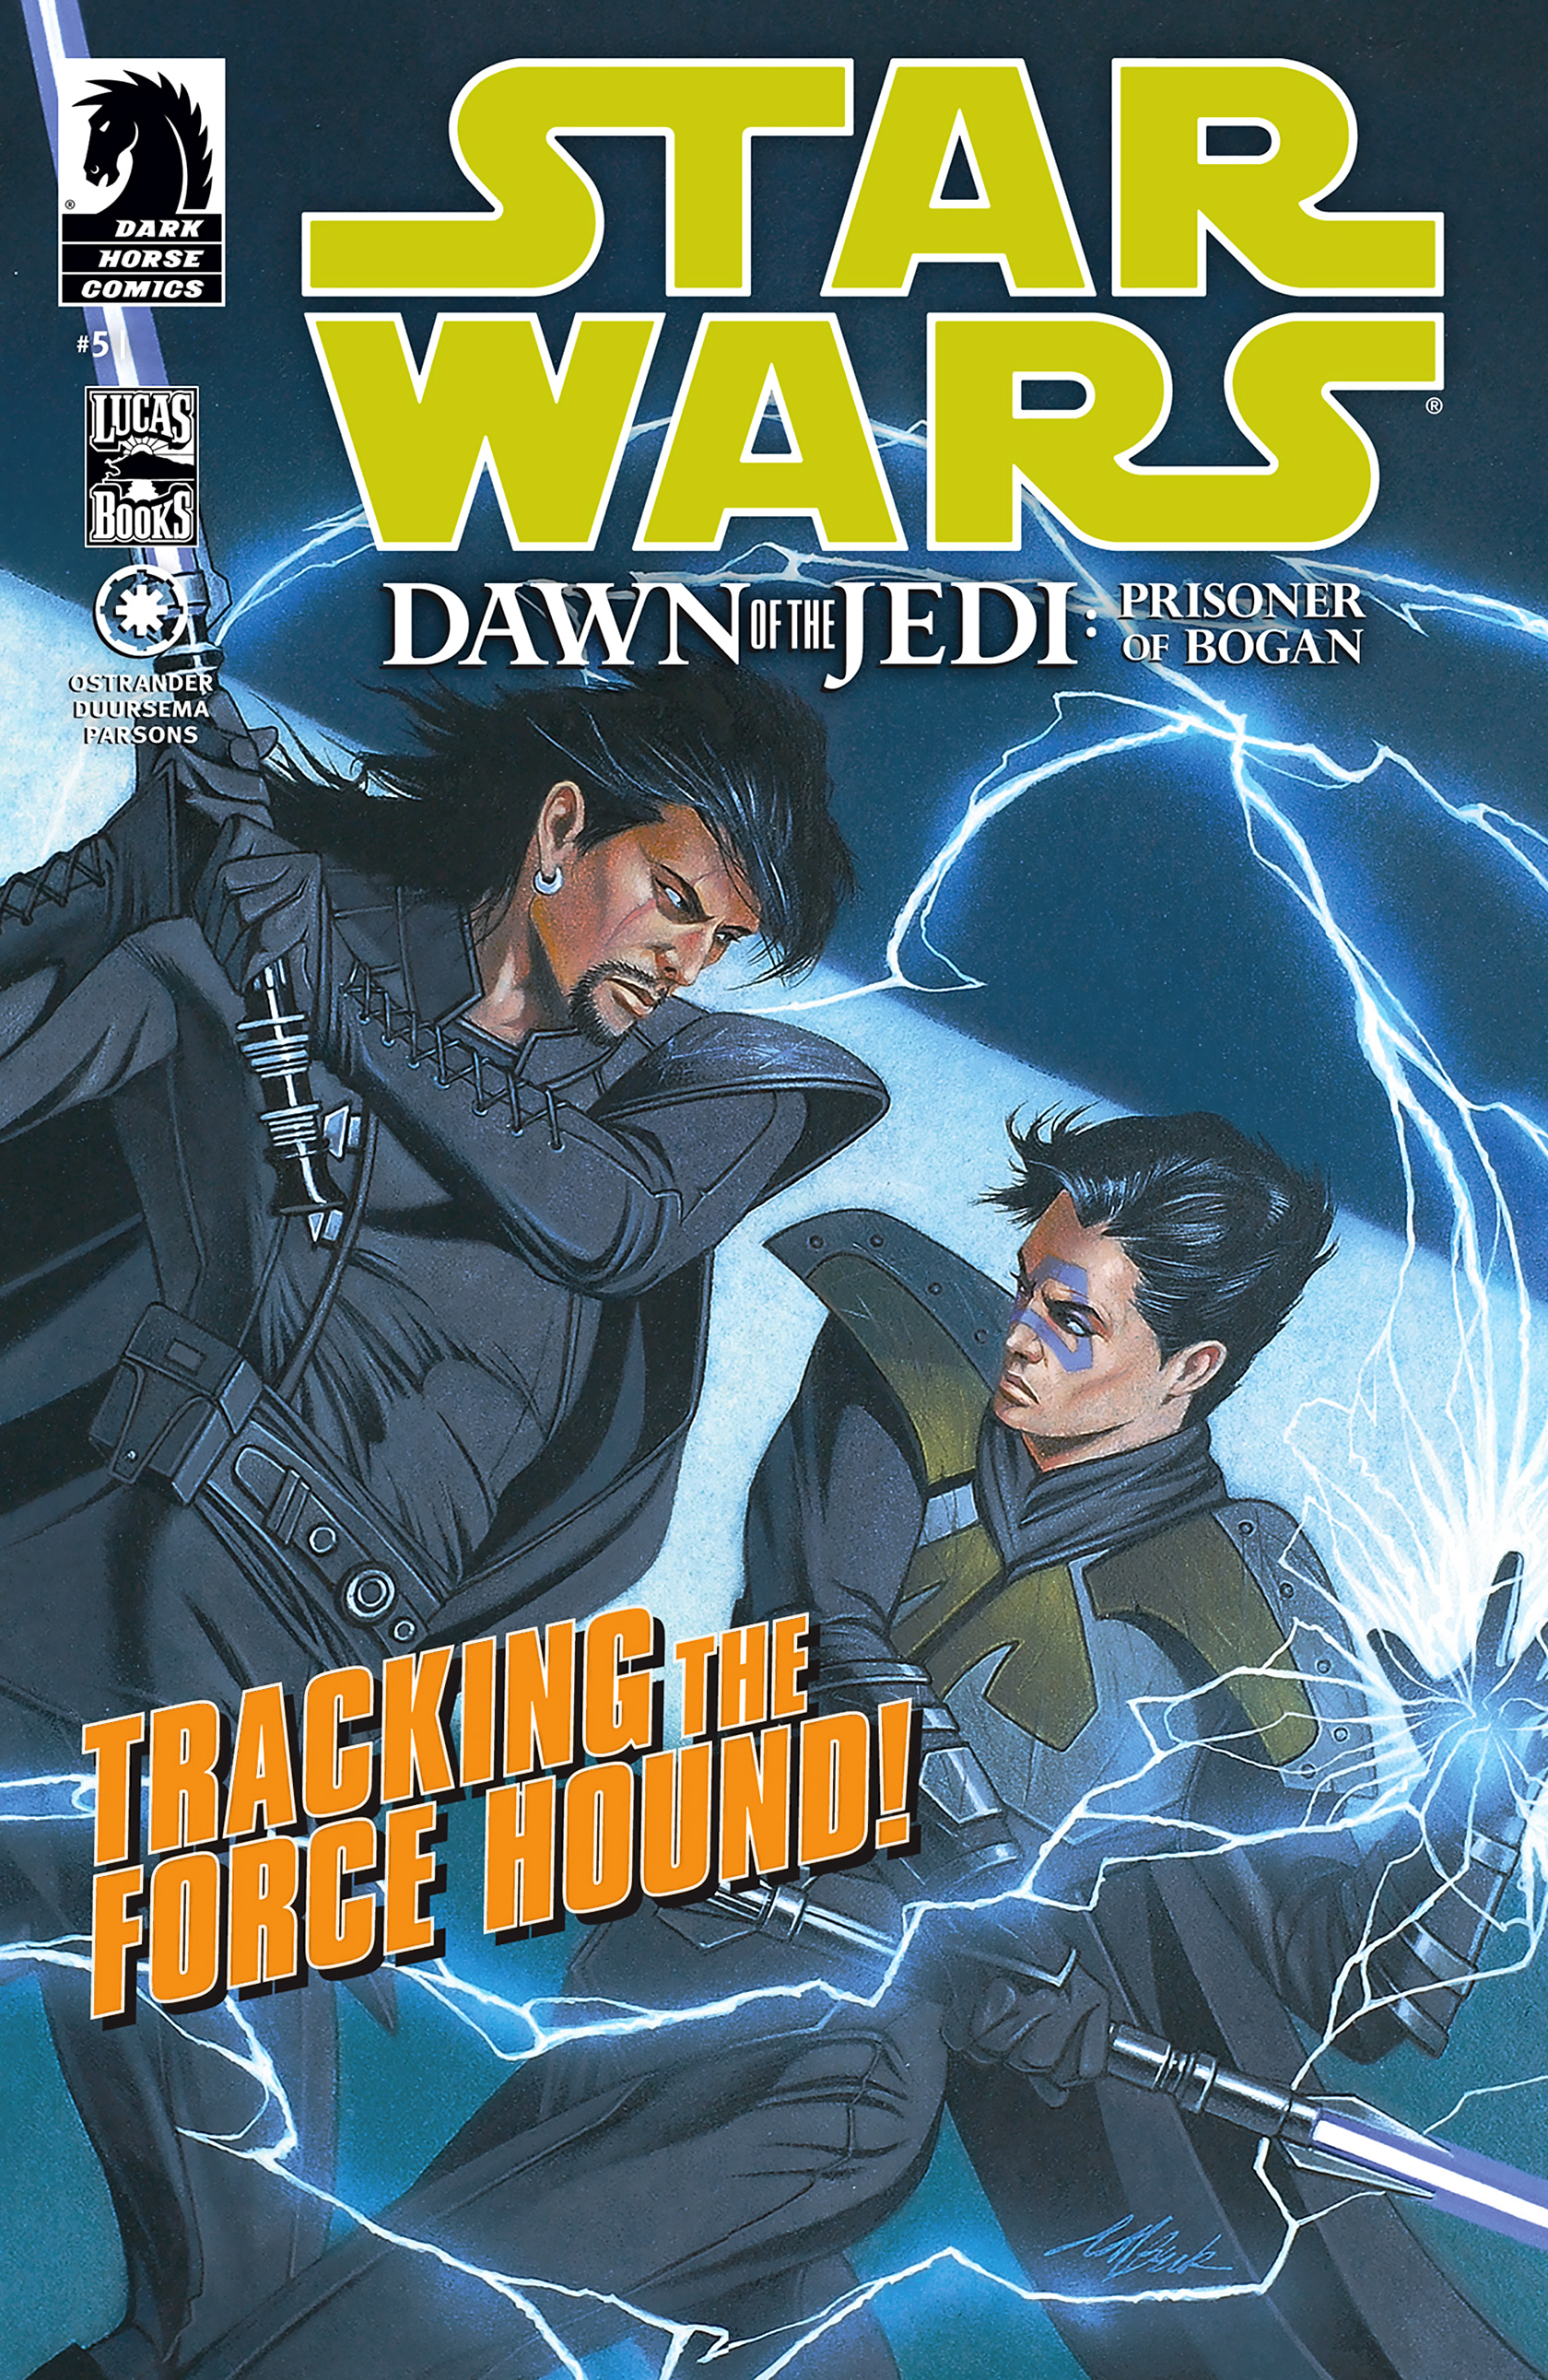 Star Wars: Dawn of the Jedi - Prisoner of Bogan issue 5 - Page 1